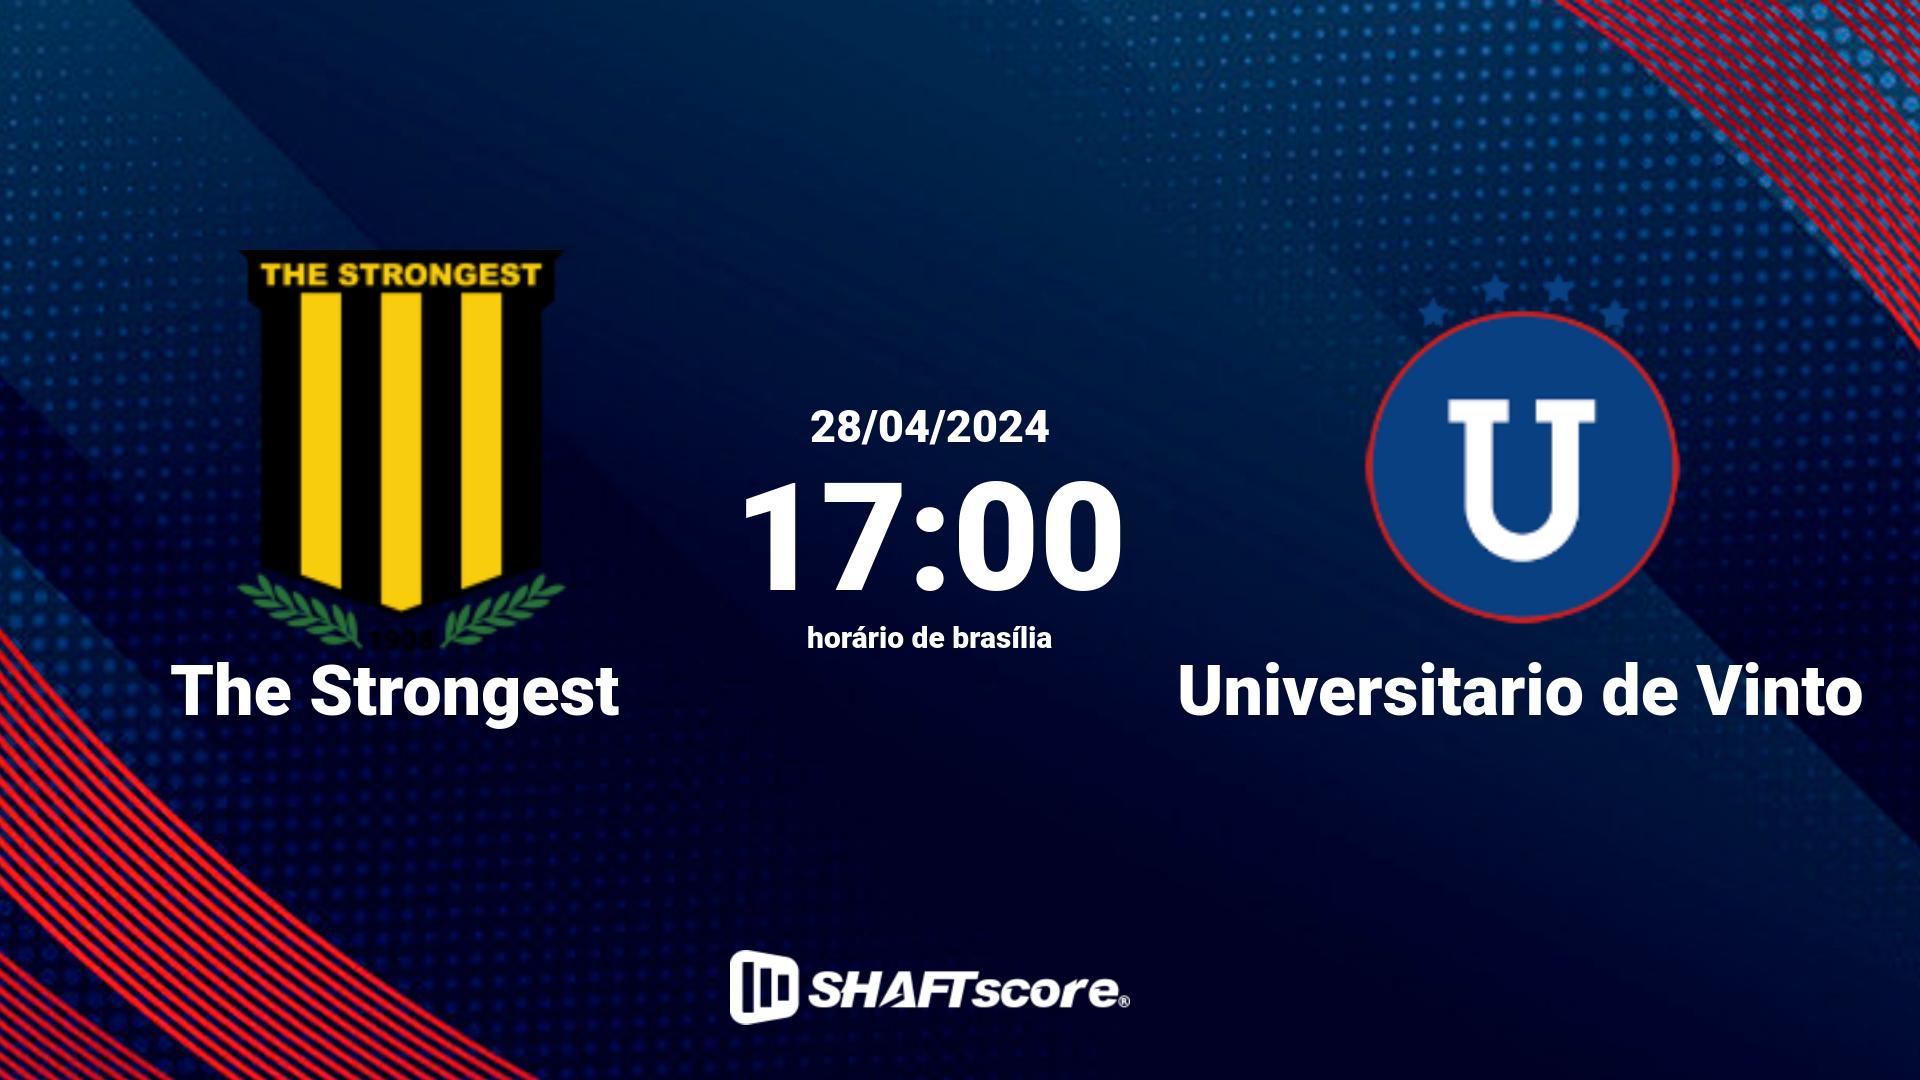 Estatísticas do jogo The Strongest vs Universitario de Vinto 28.04 17:00